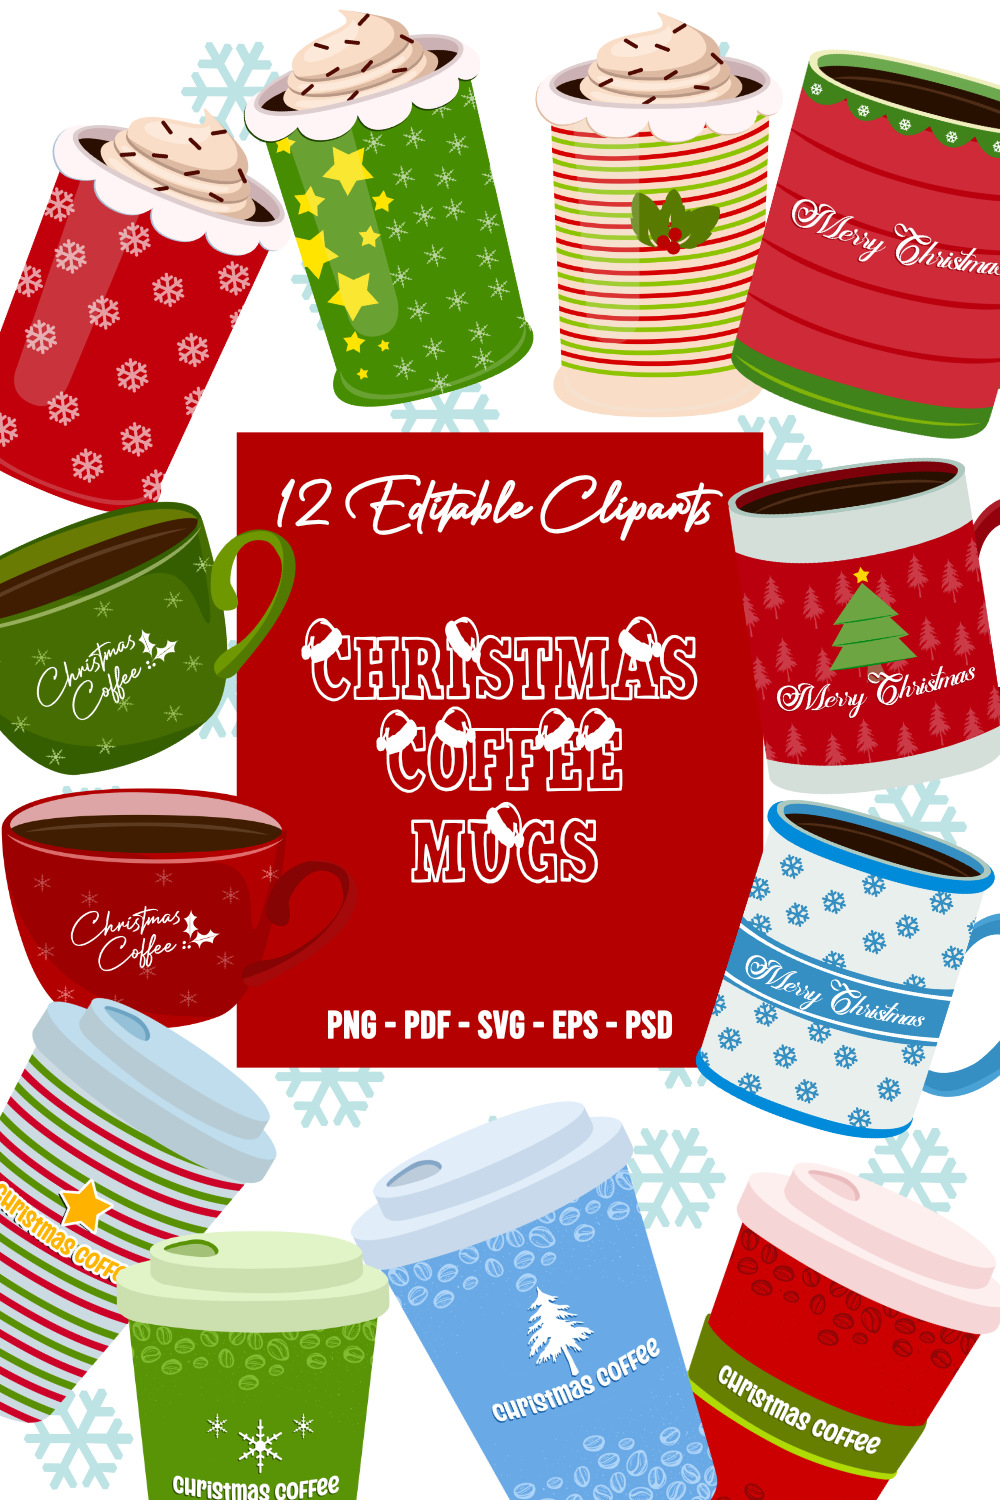 Coloured Christmas Coffee Mugs Designs Pinterest image.